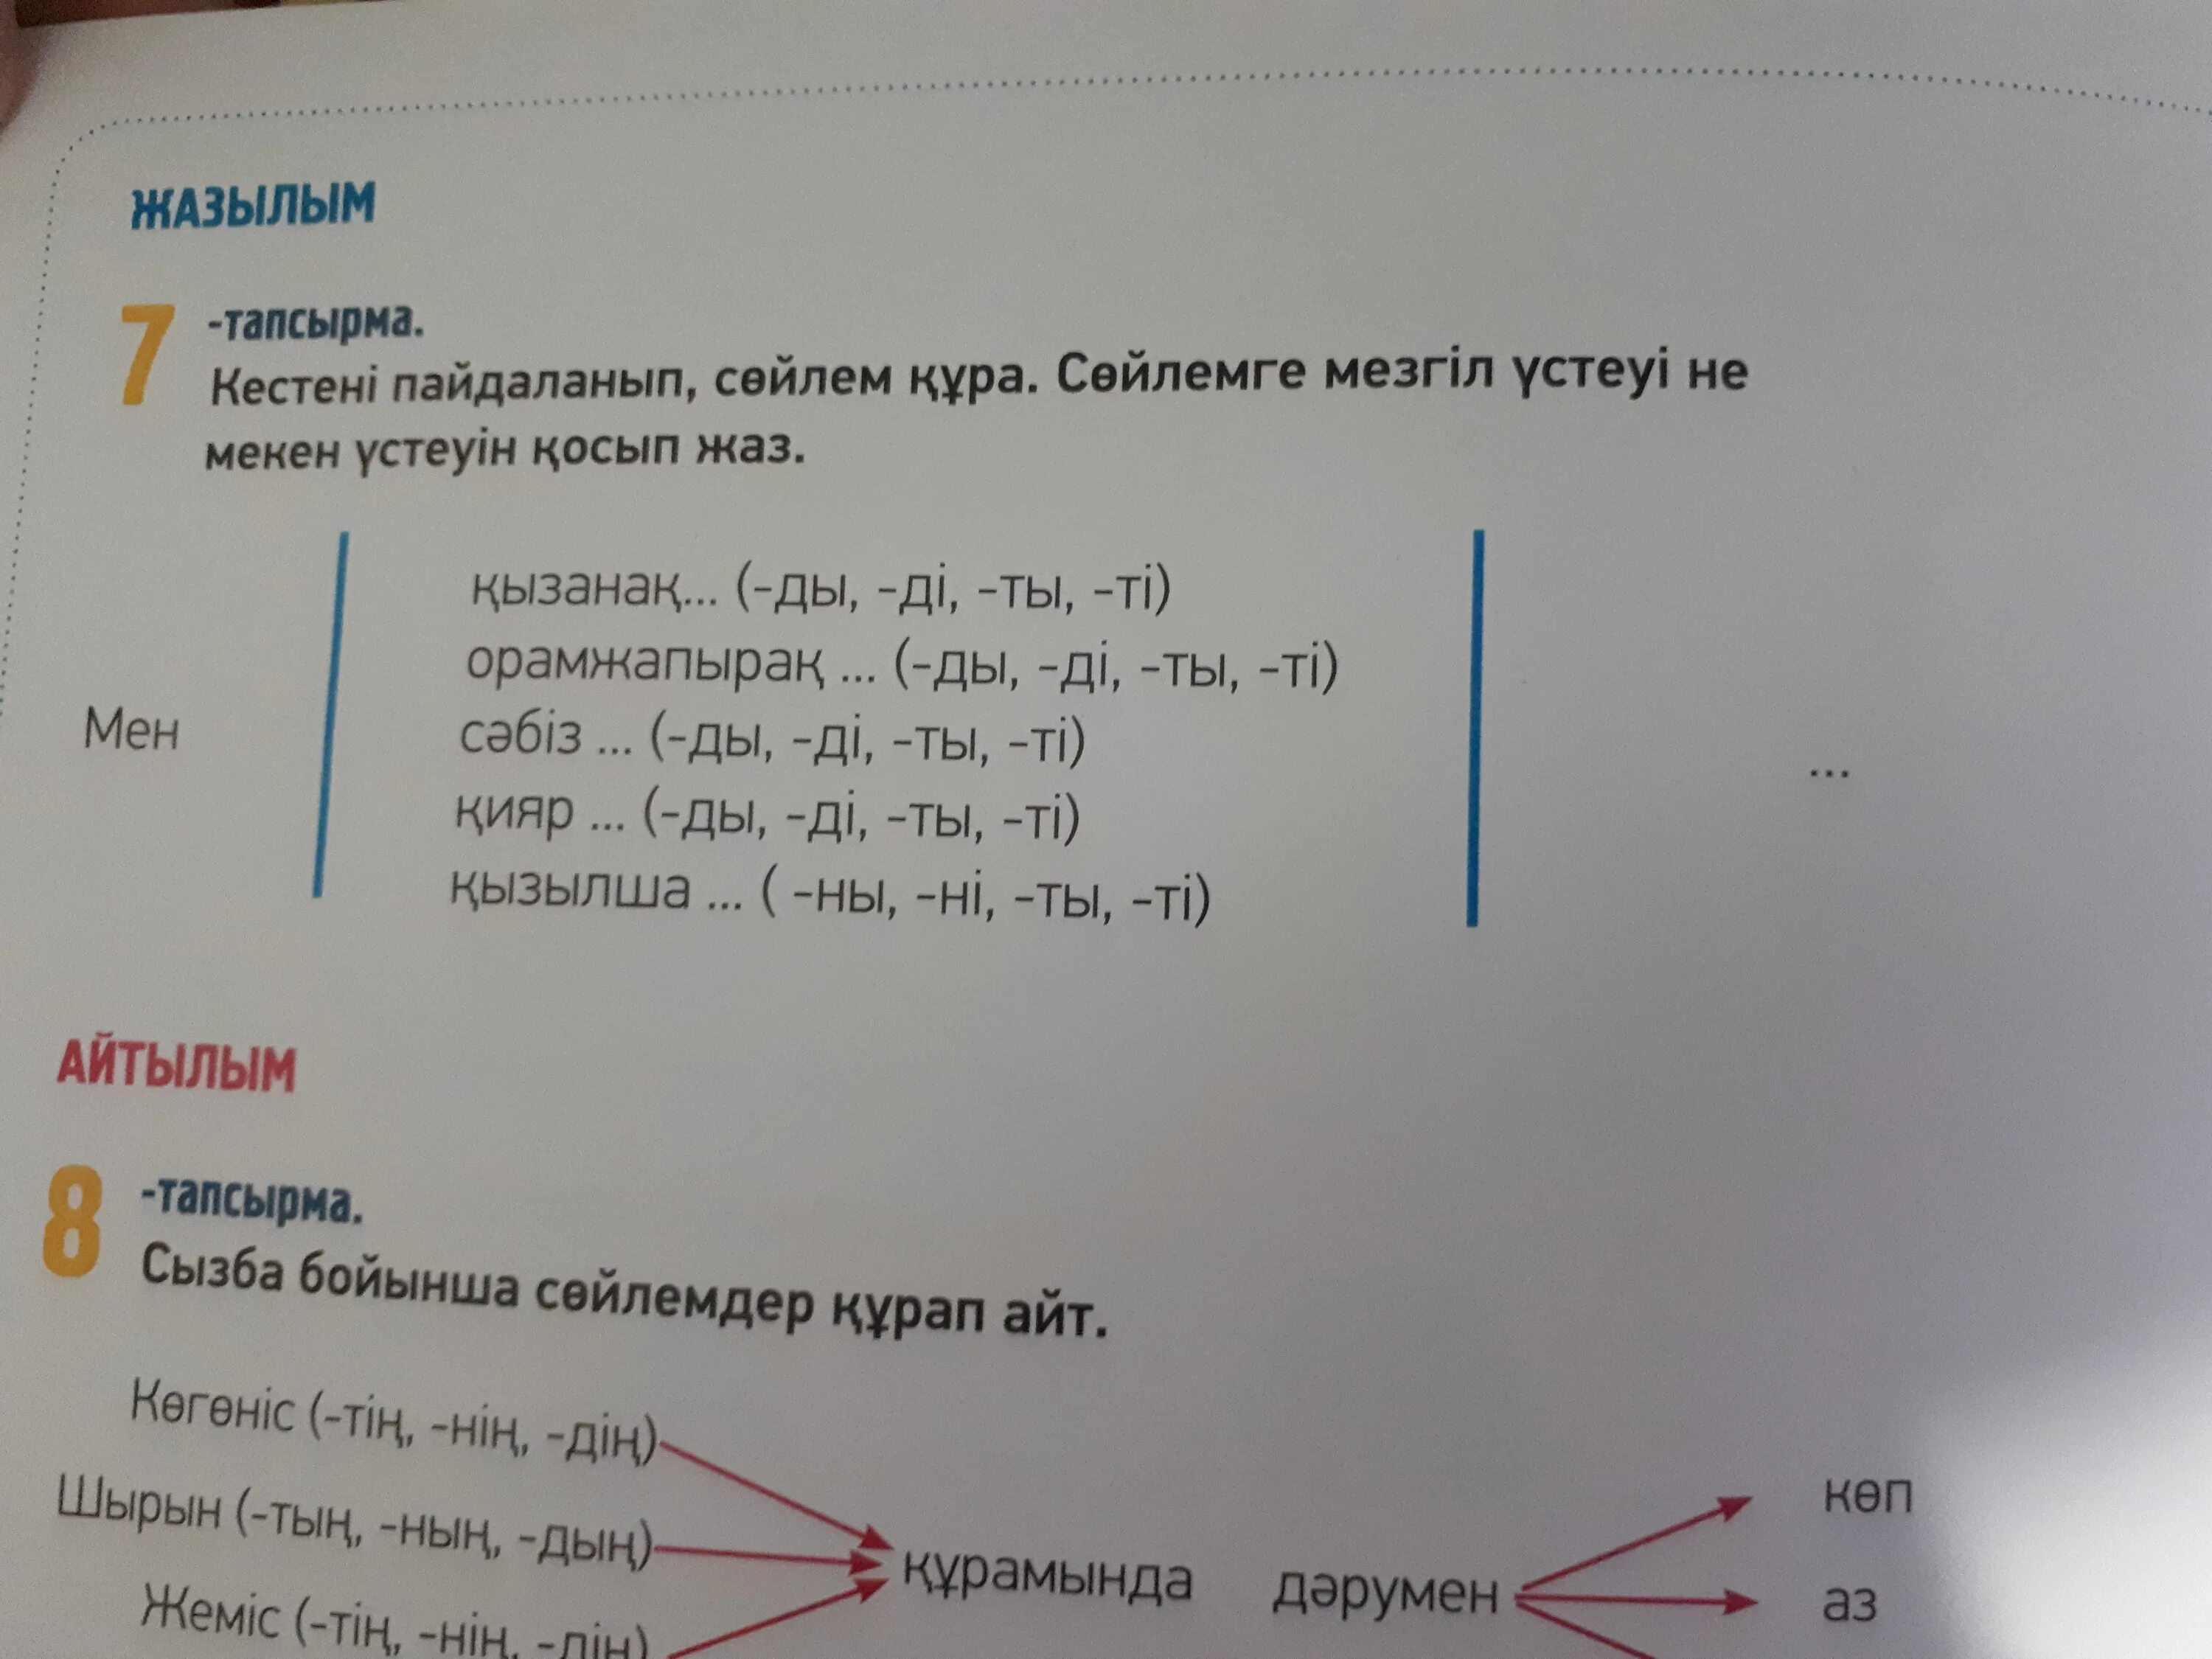 Заданий по казахскому языку. Задания по казахскому языку 1 класс. Задание по казахскому языку 5 класс. Карточки по казахскому языку.